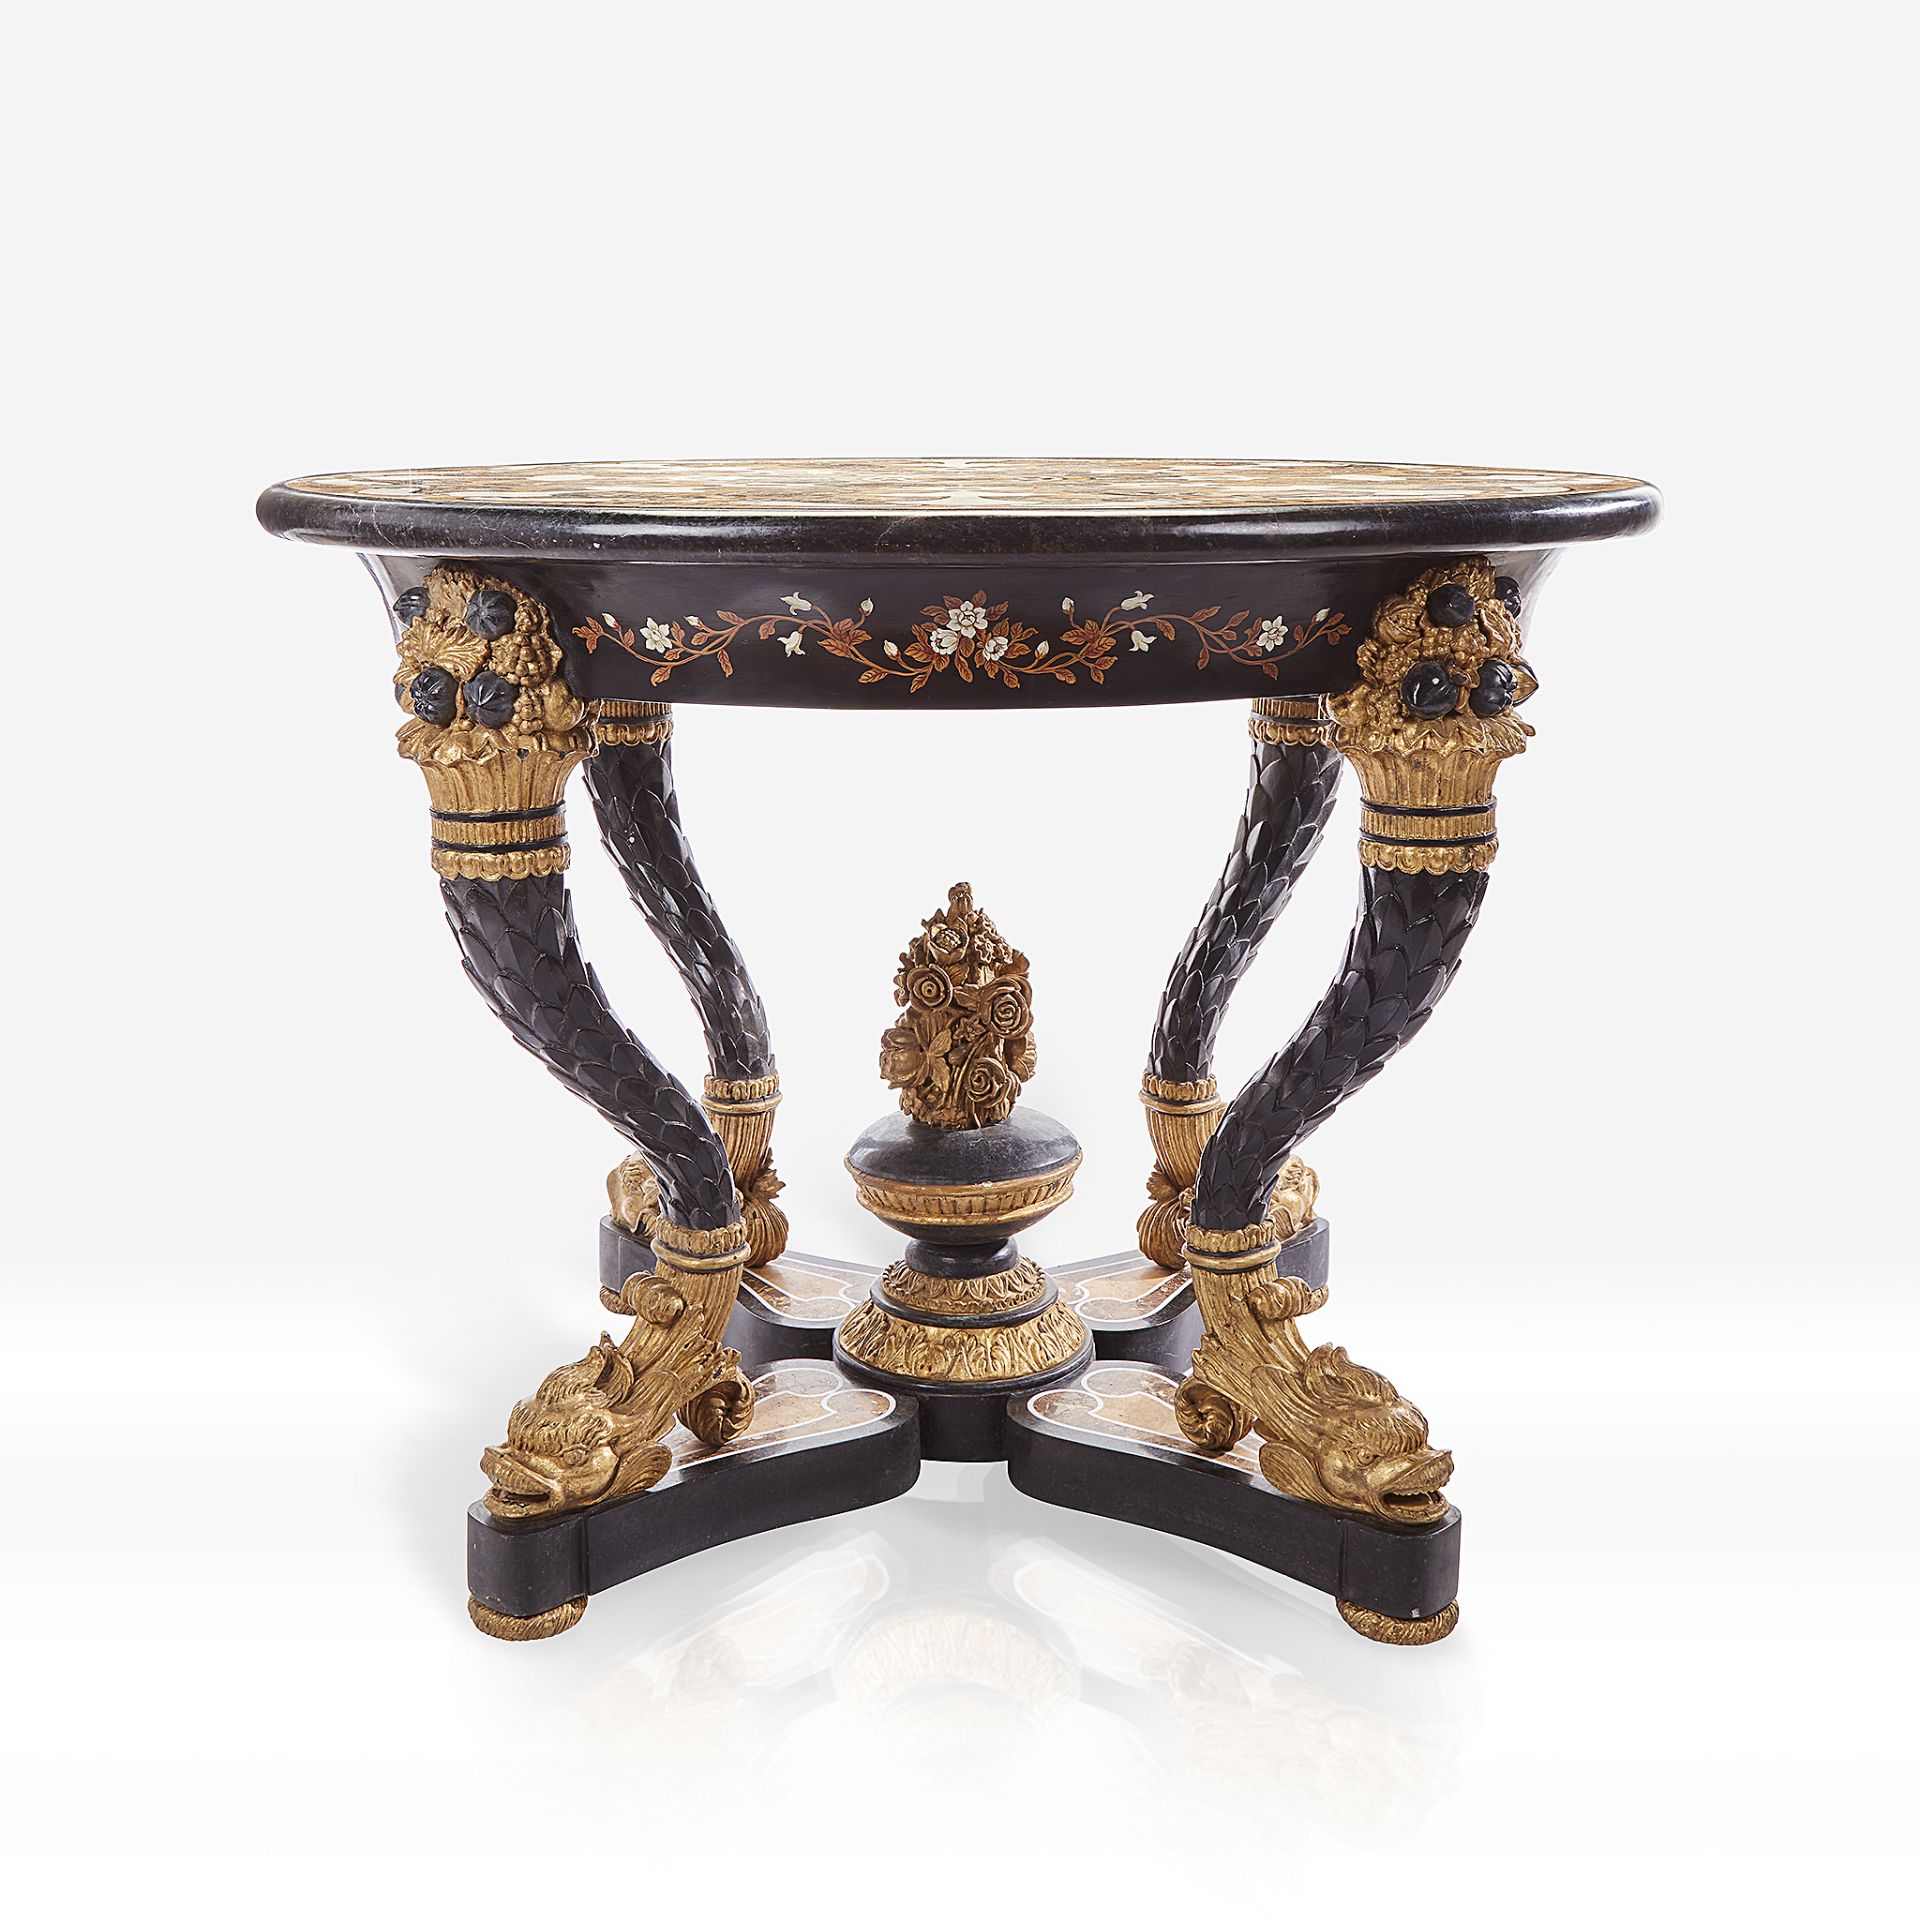 An Italian pietra dura and gilt and ebonized wood table, Late 19th century